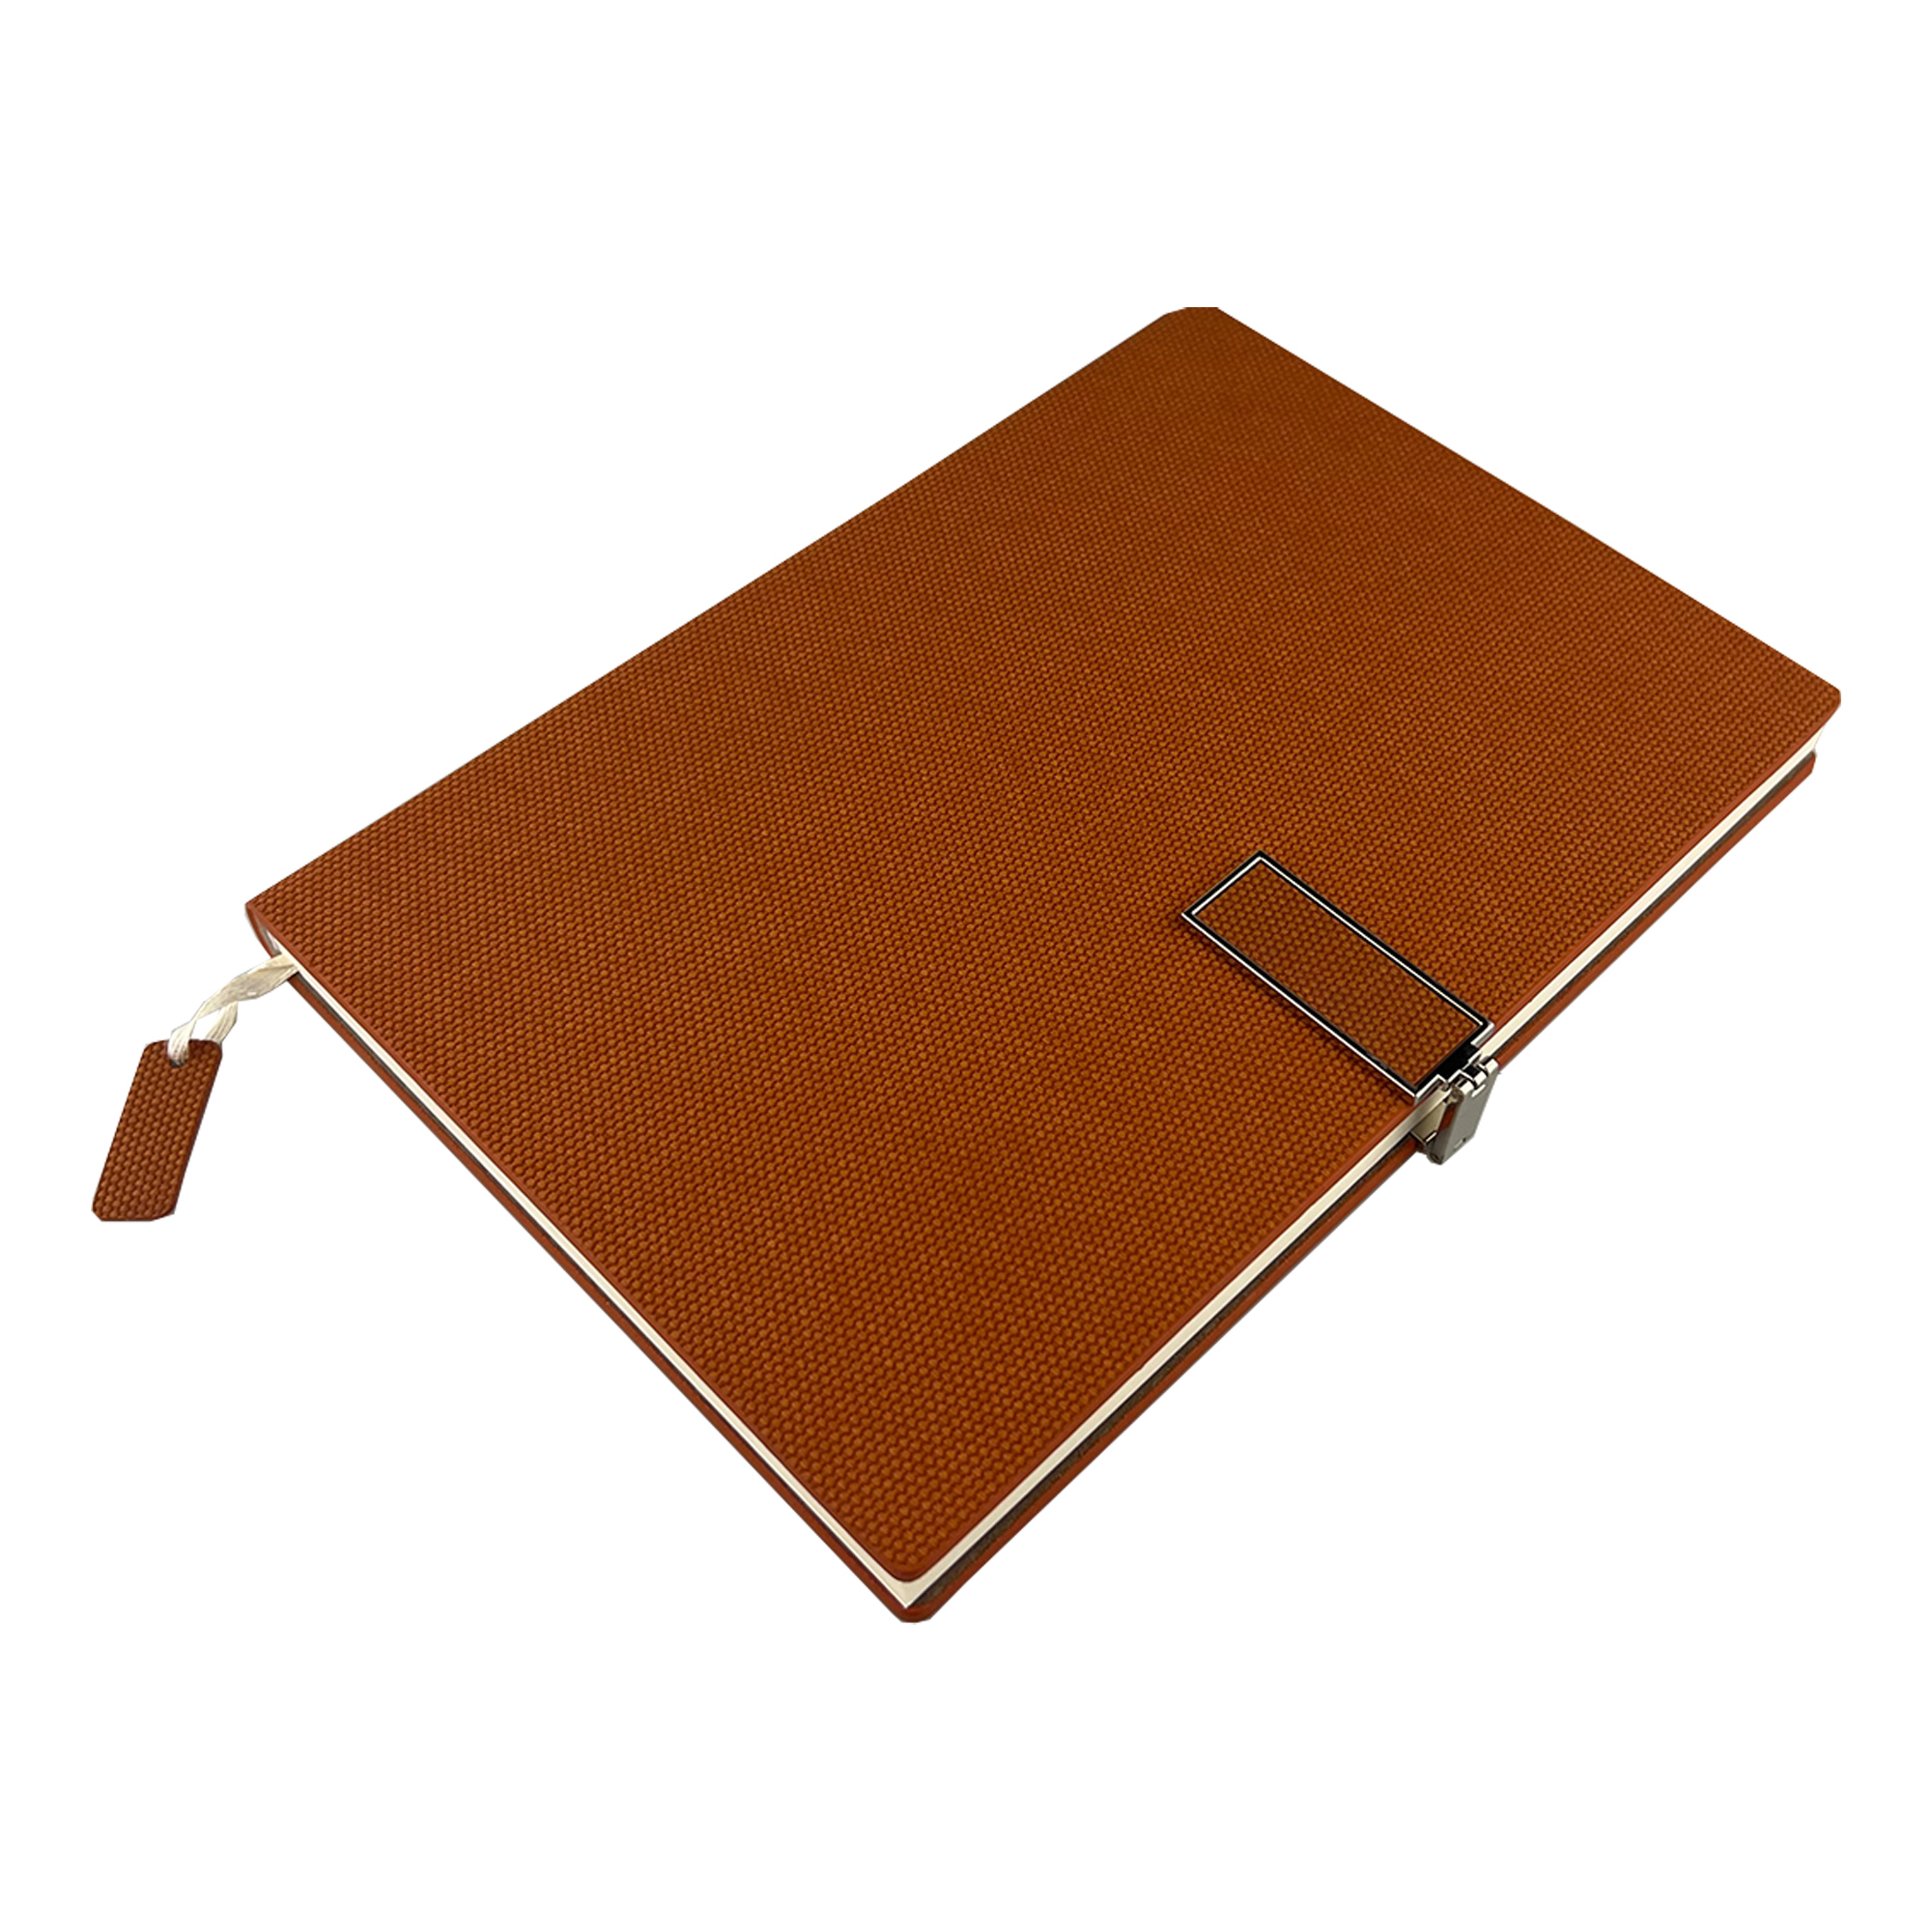 Century Notebook NB023 | Feature